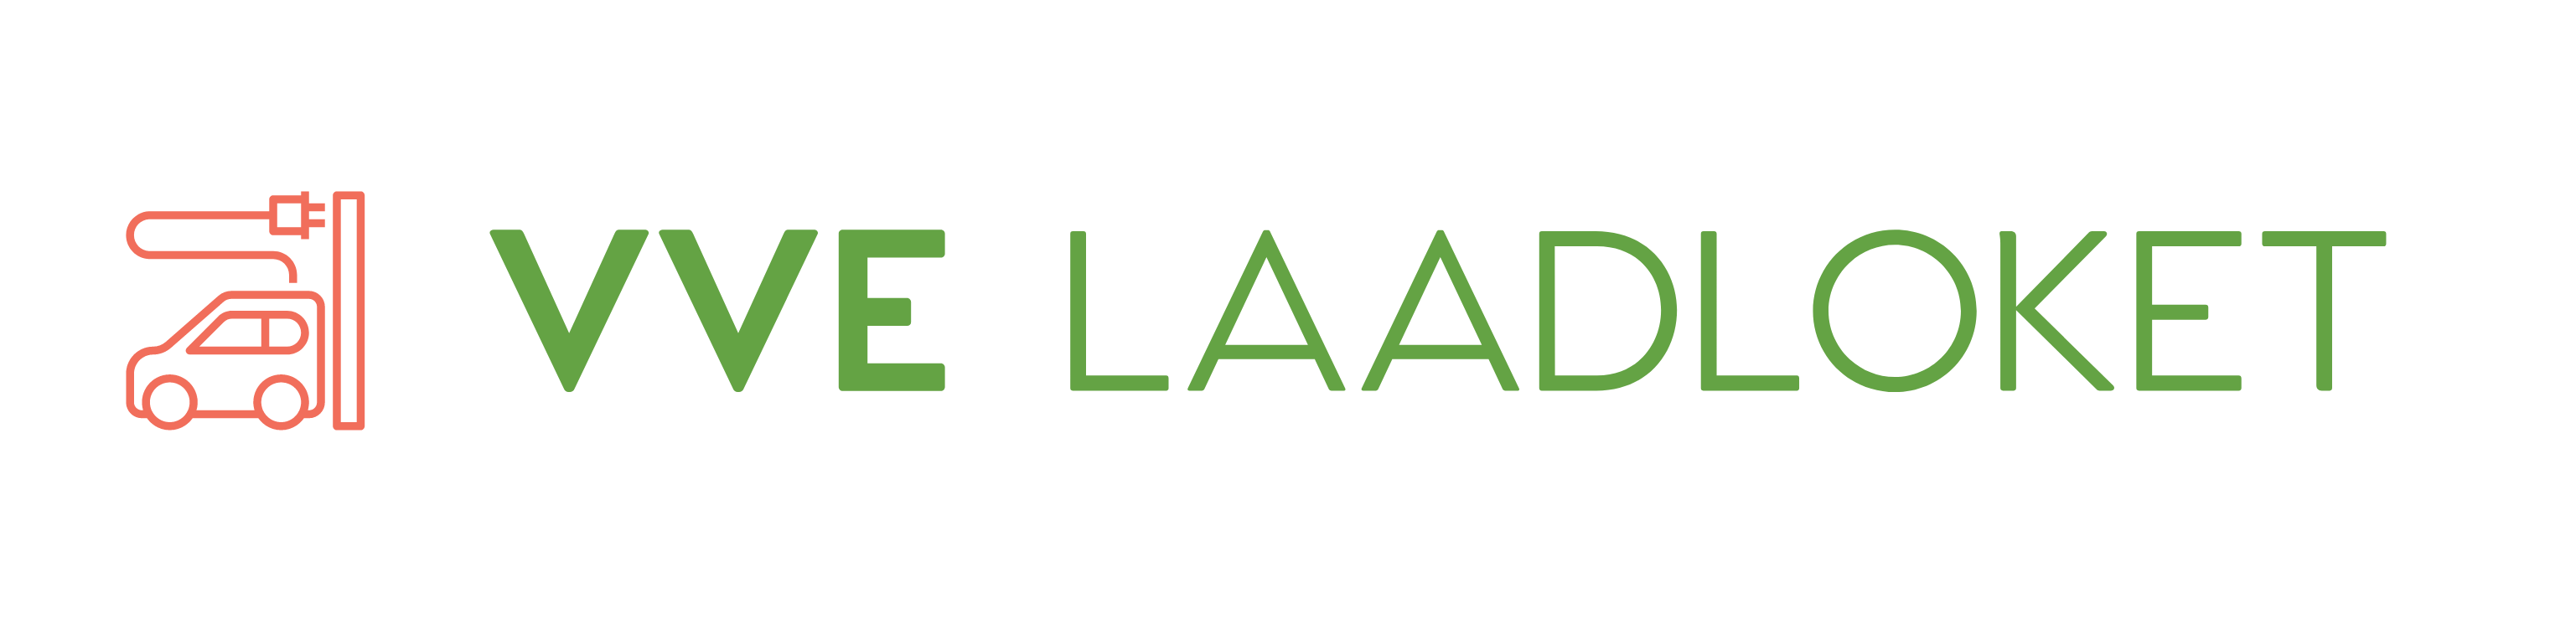 VVE Laadloket logo